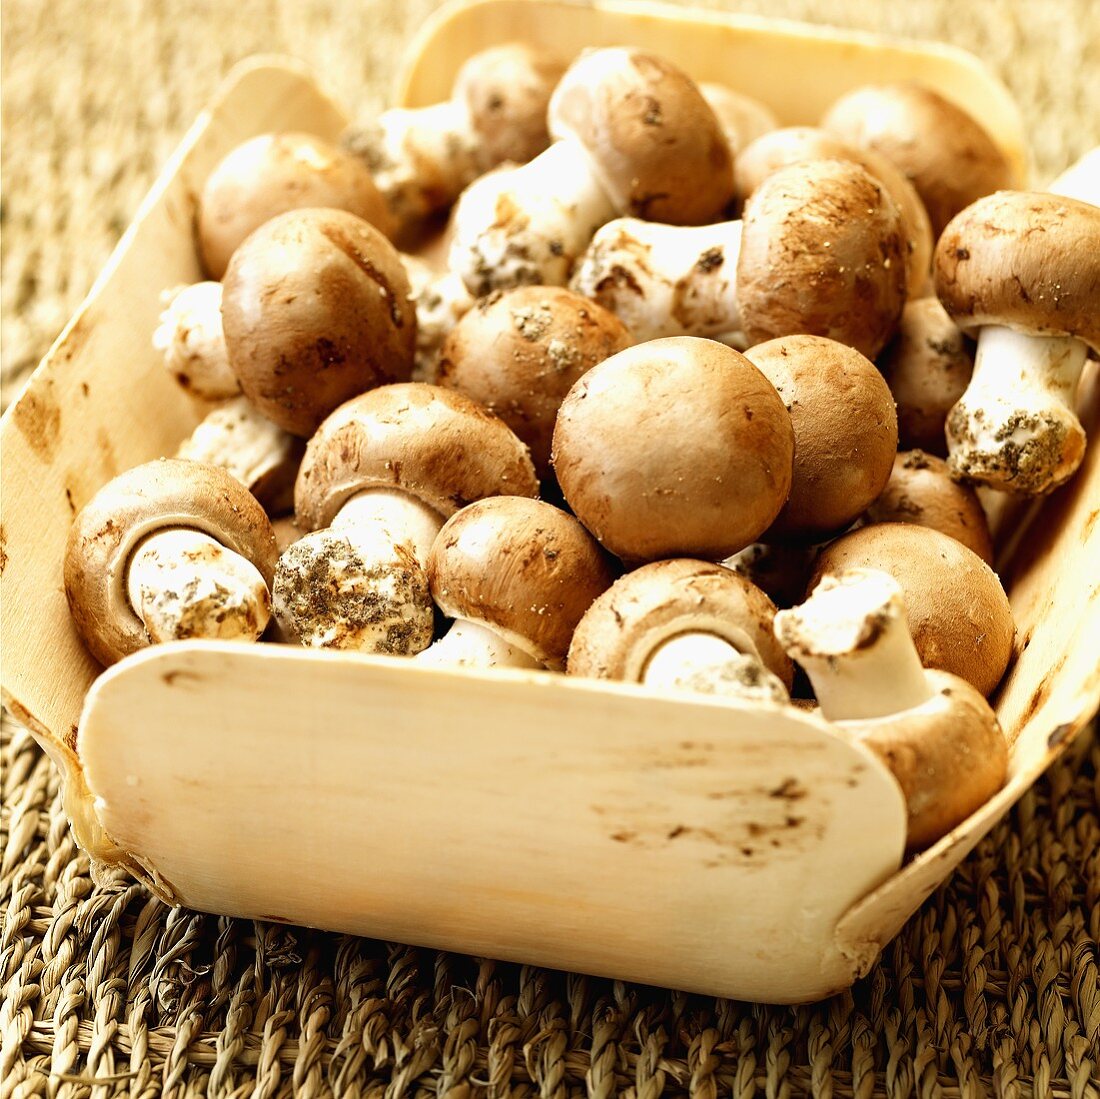 Fresh, dirty chestnut mushrooms in a wooden box